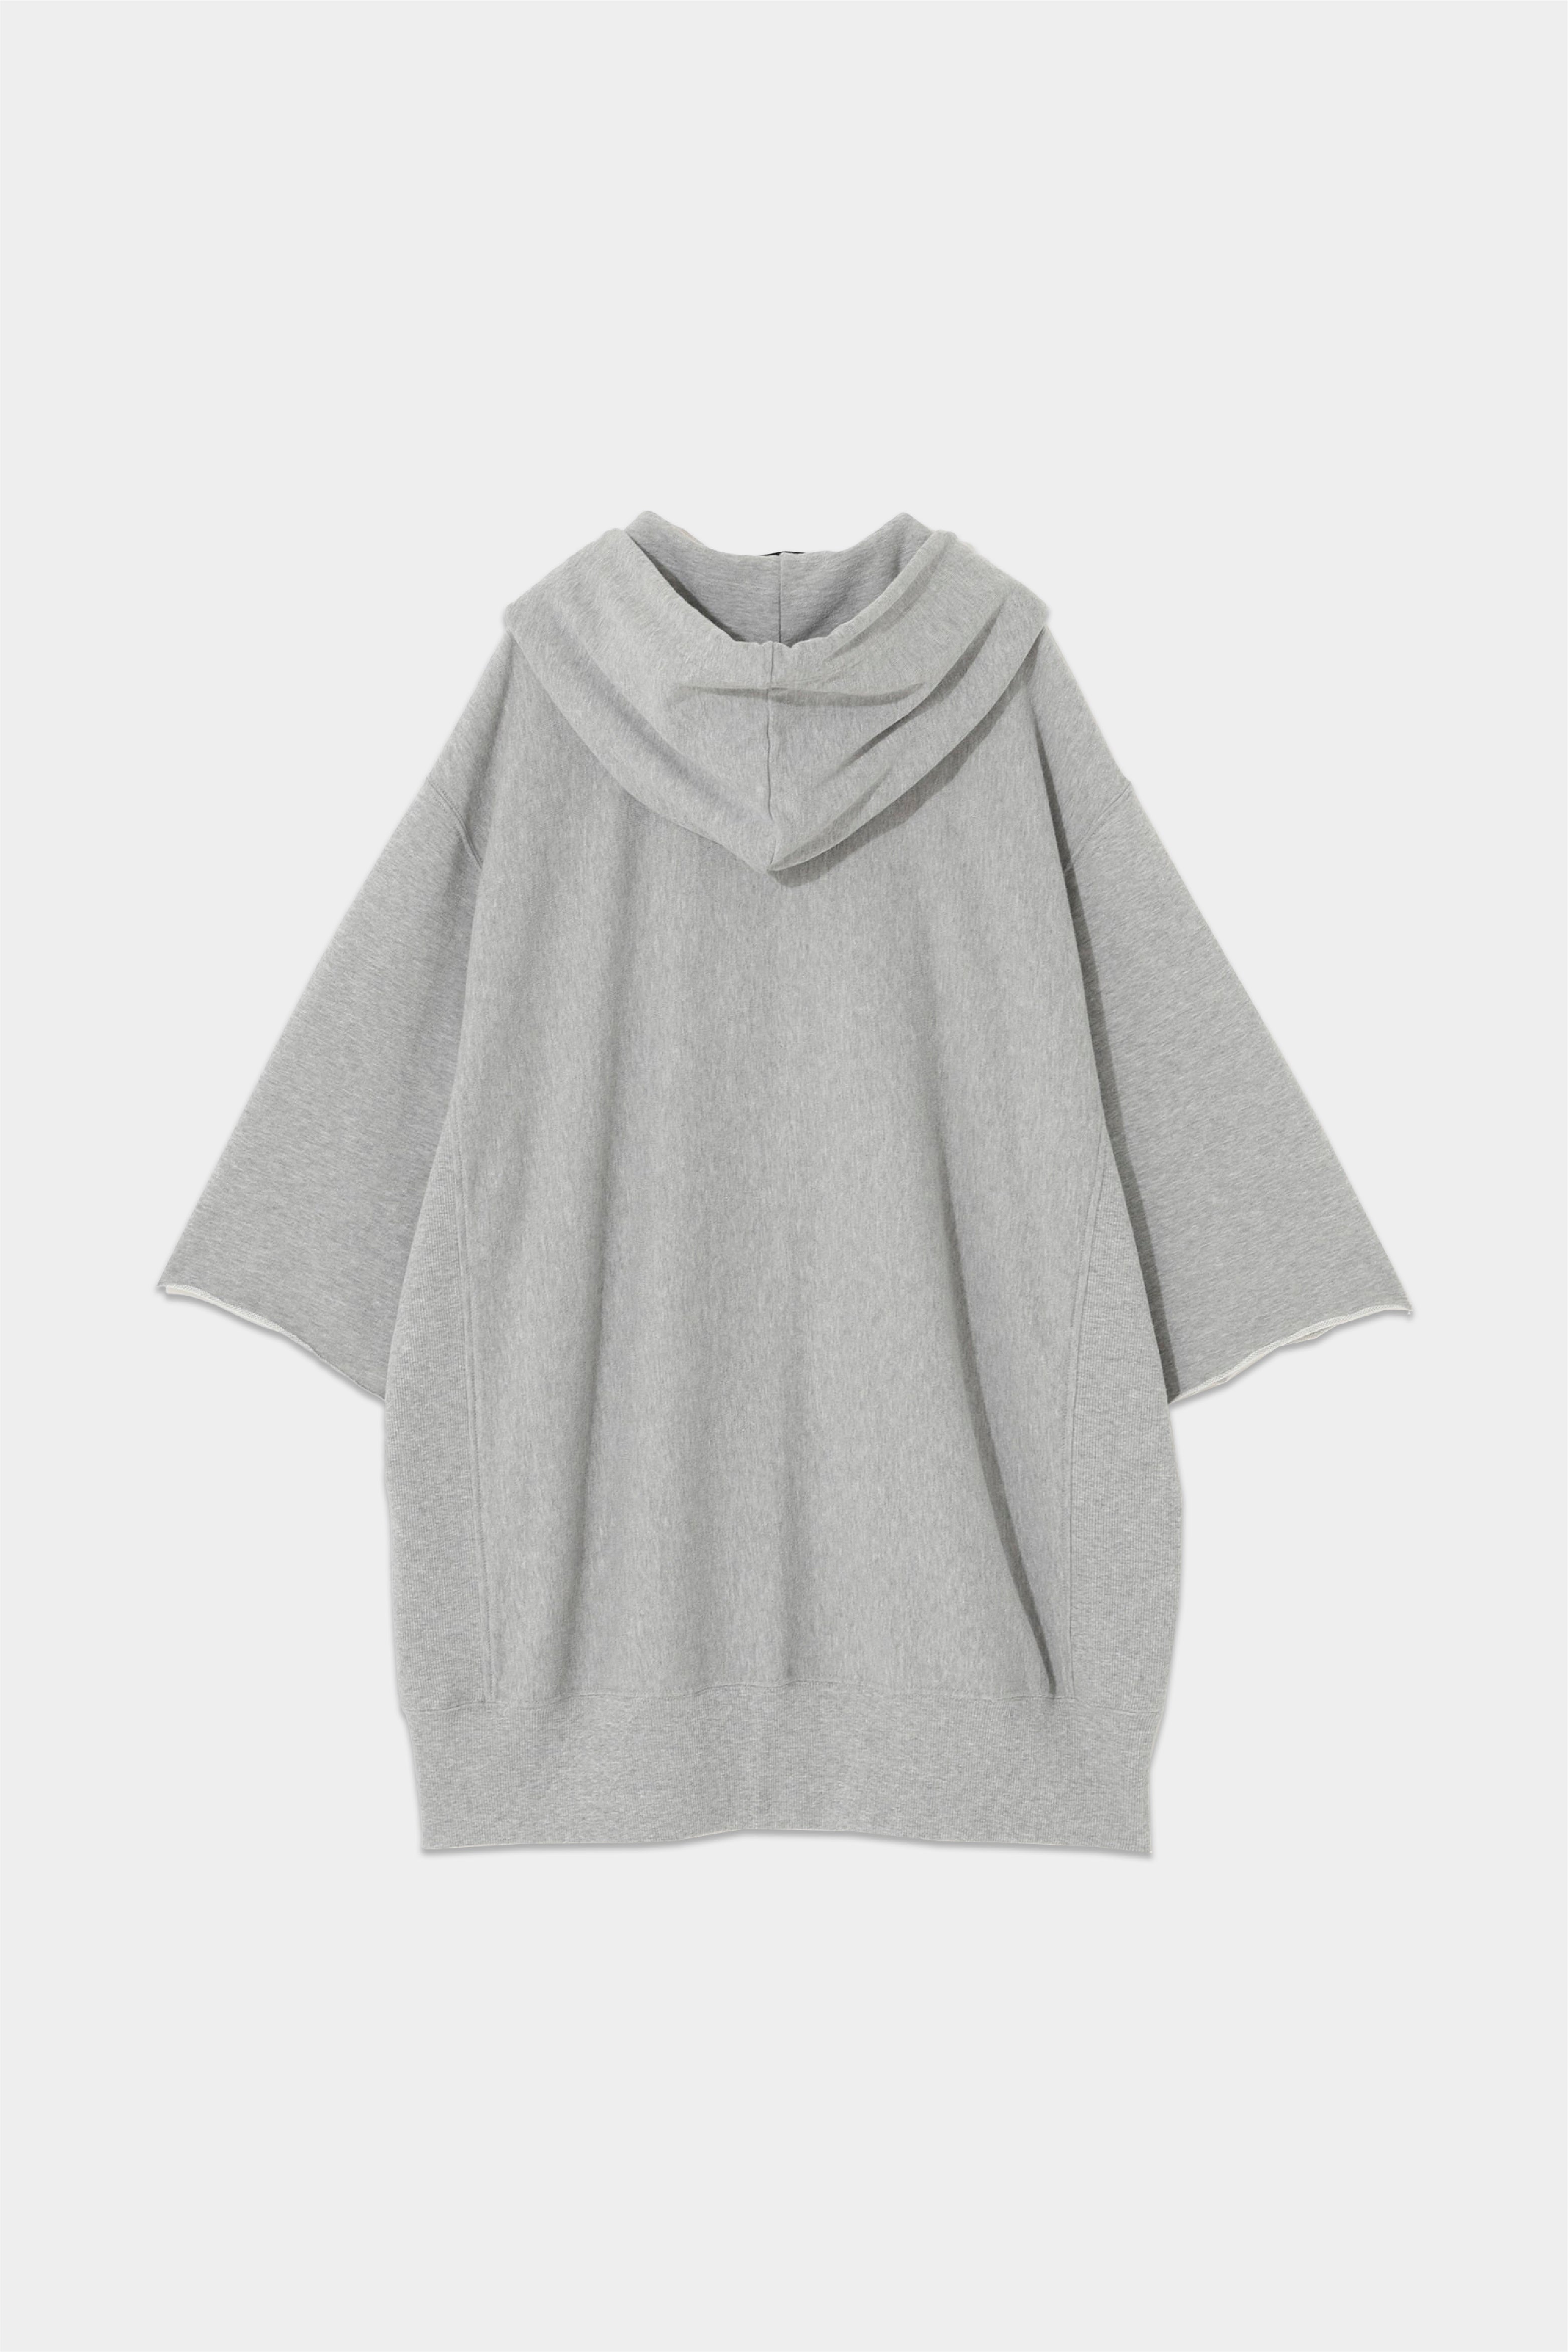 Selectshop FRAME - UNDERCOVER Hoodie Sweats-knits Concept Store Dubai